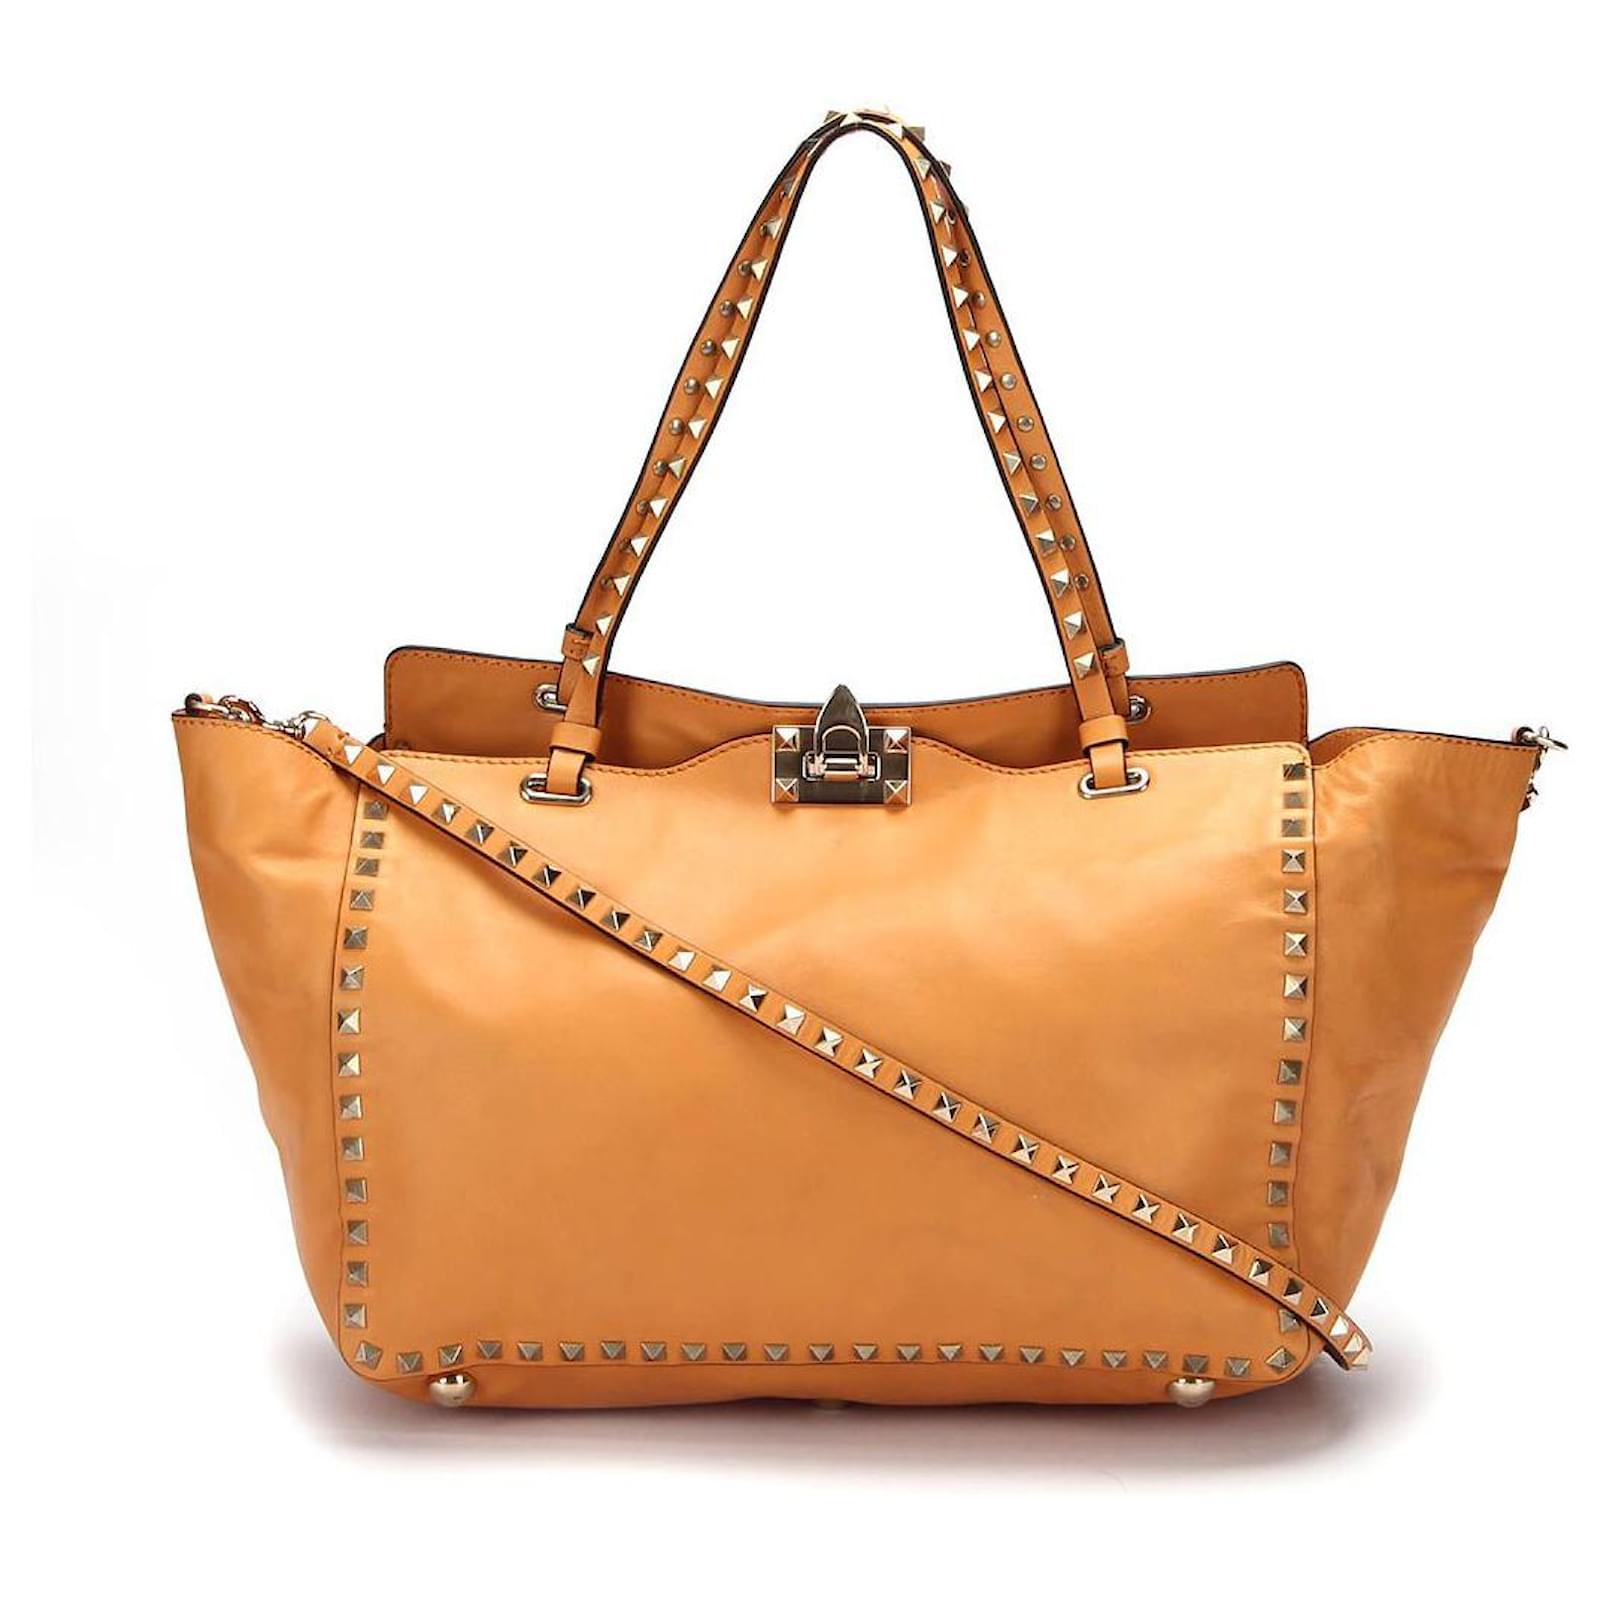 Valentino Rockstud 2way Leather Handbag